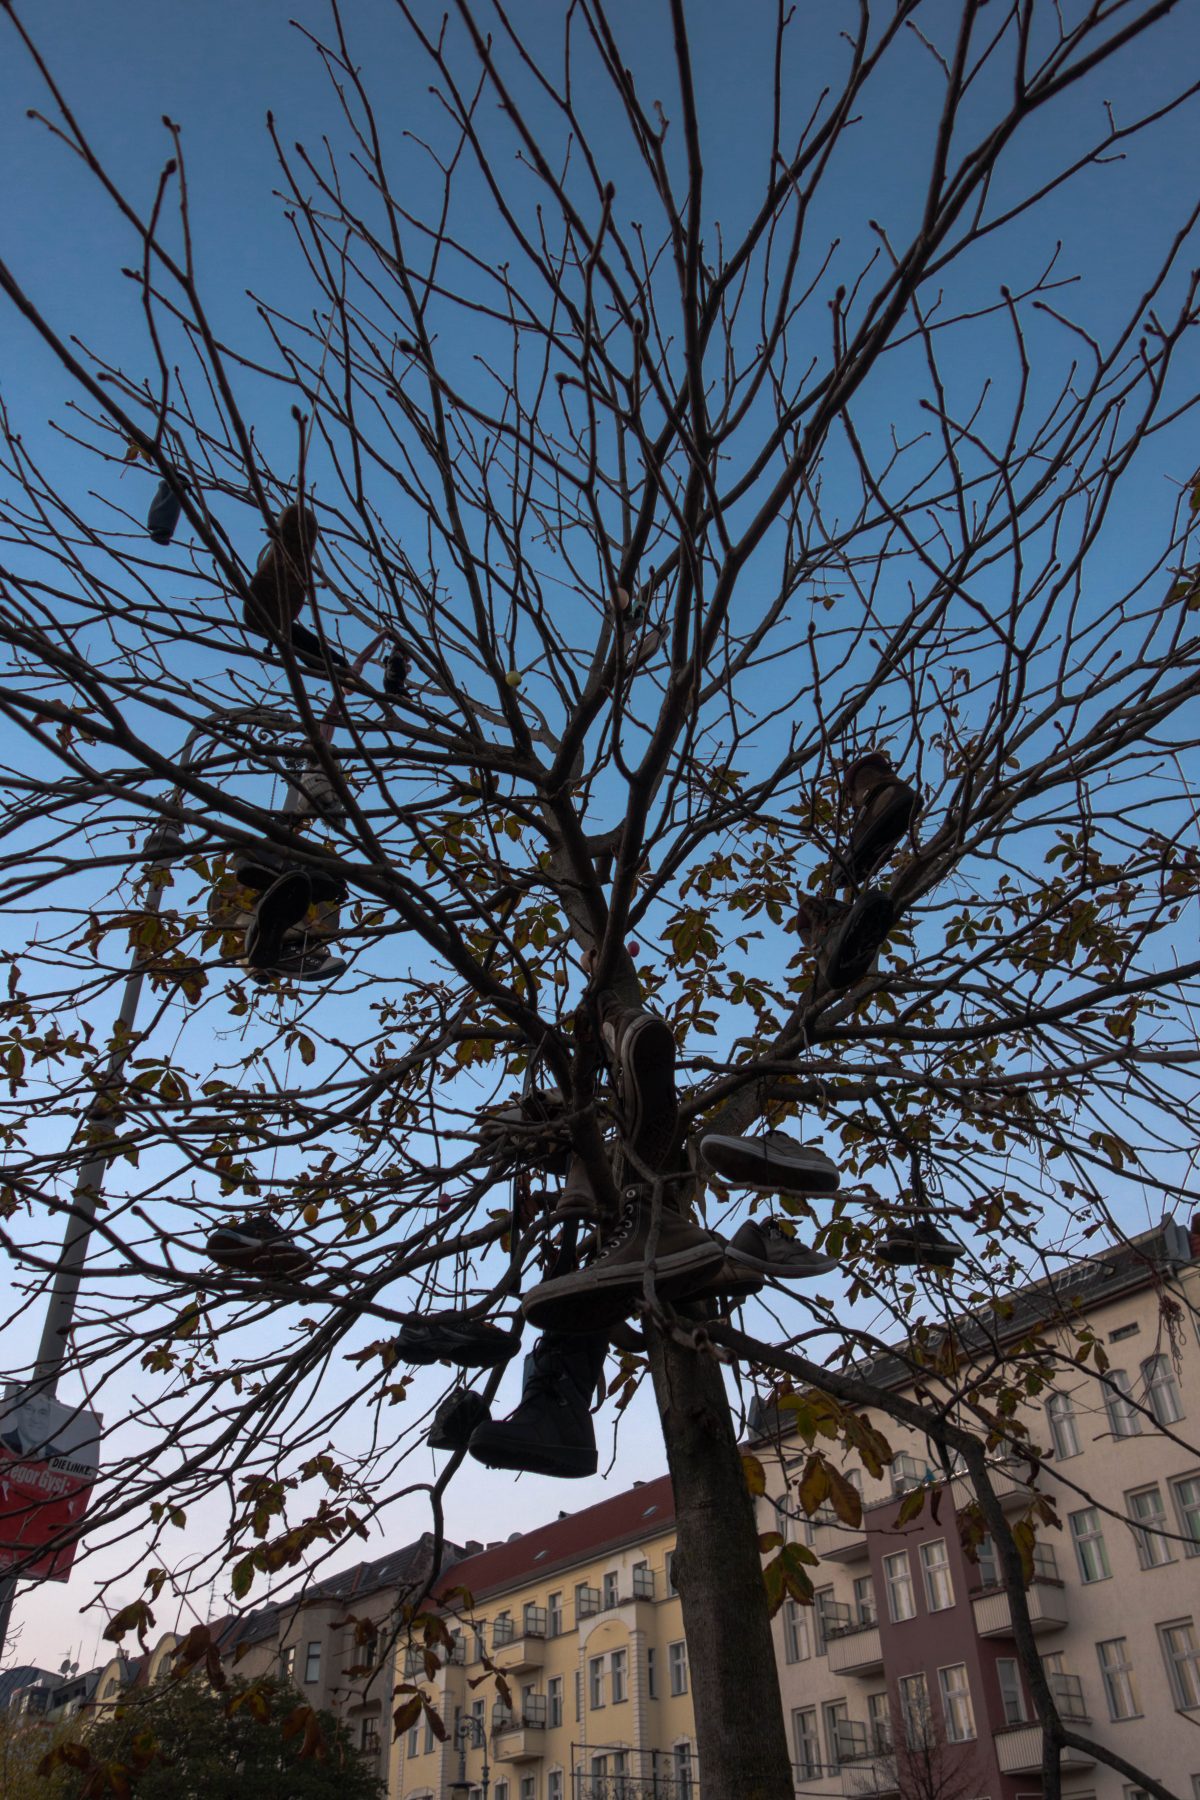 Shoes on a tree in Berlin